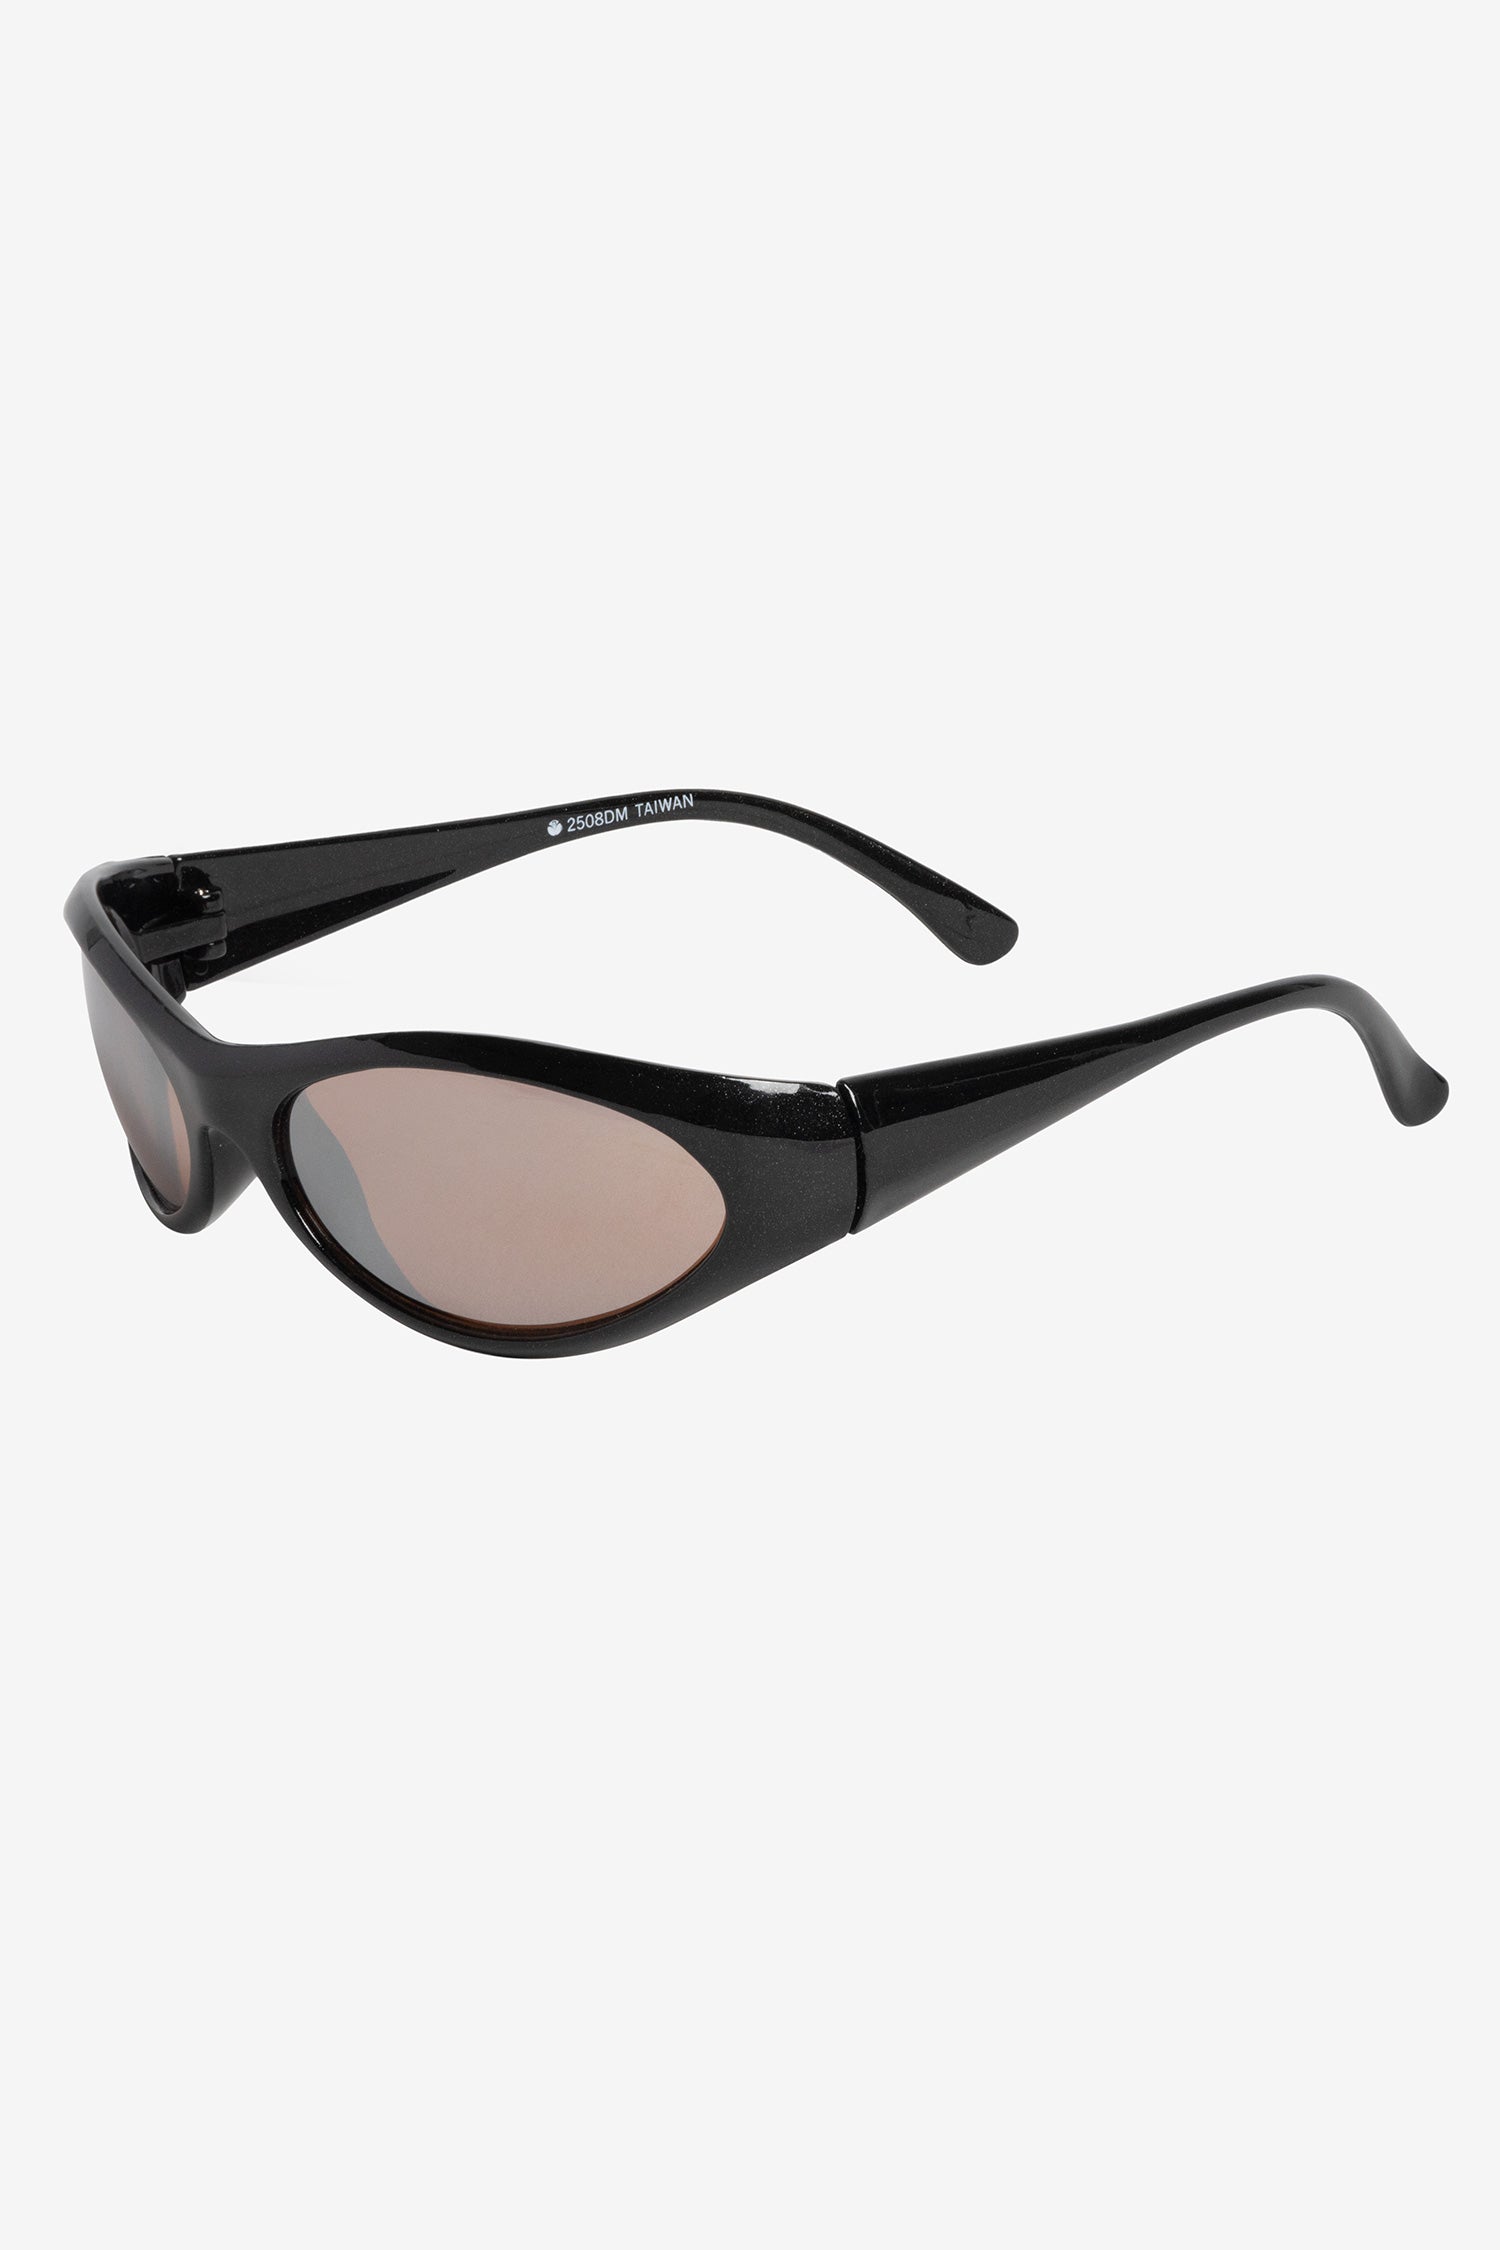 SGVN86 - Cmax Runner Sunglasses – Los Angeles Apparel